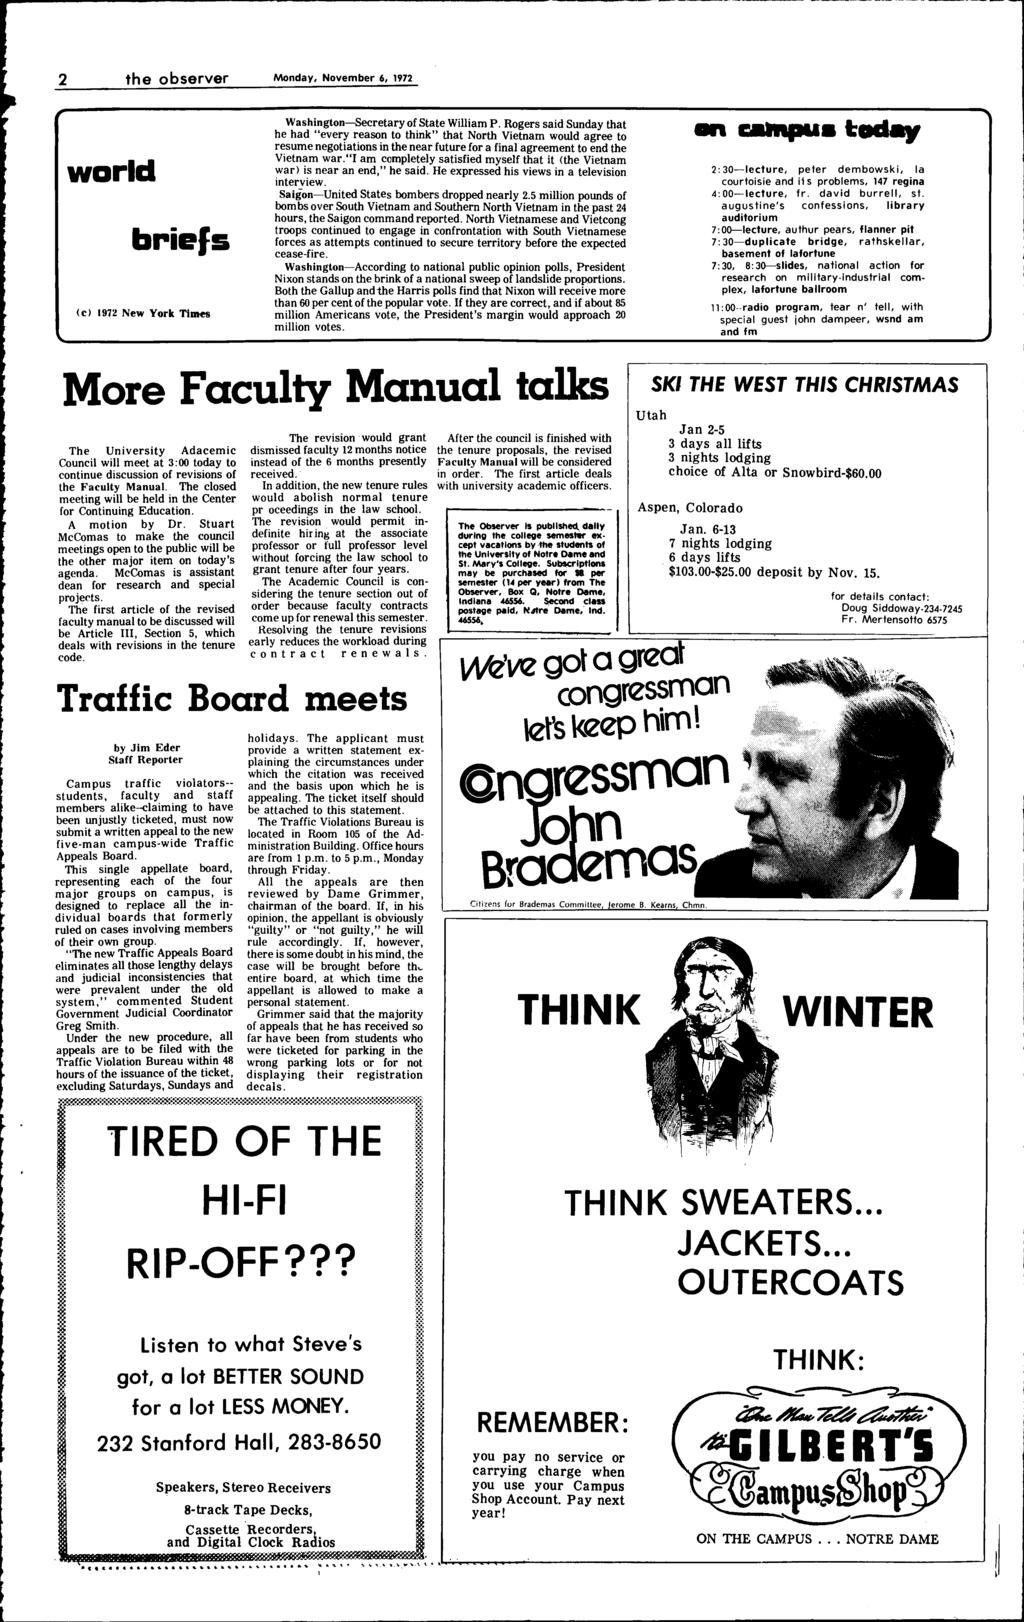 2 the obseve wald biefs <c> 1972 New Yok Times Monday, Novembe 6, 1972 Washington-Secetay of State William P.